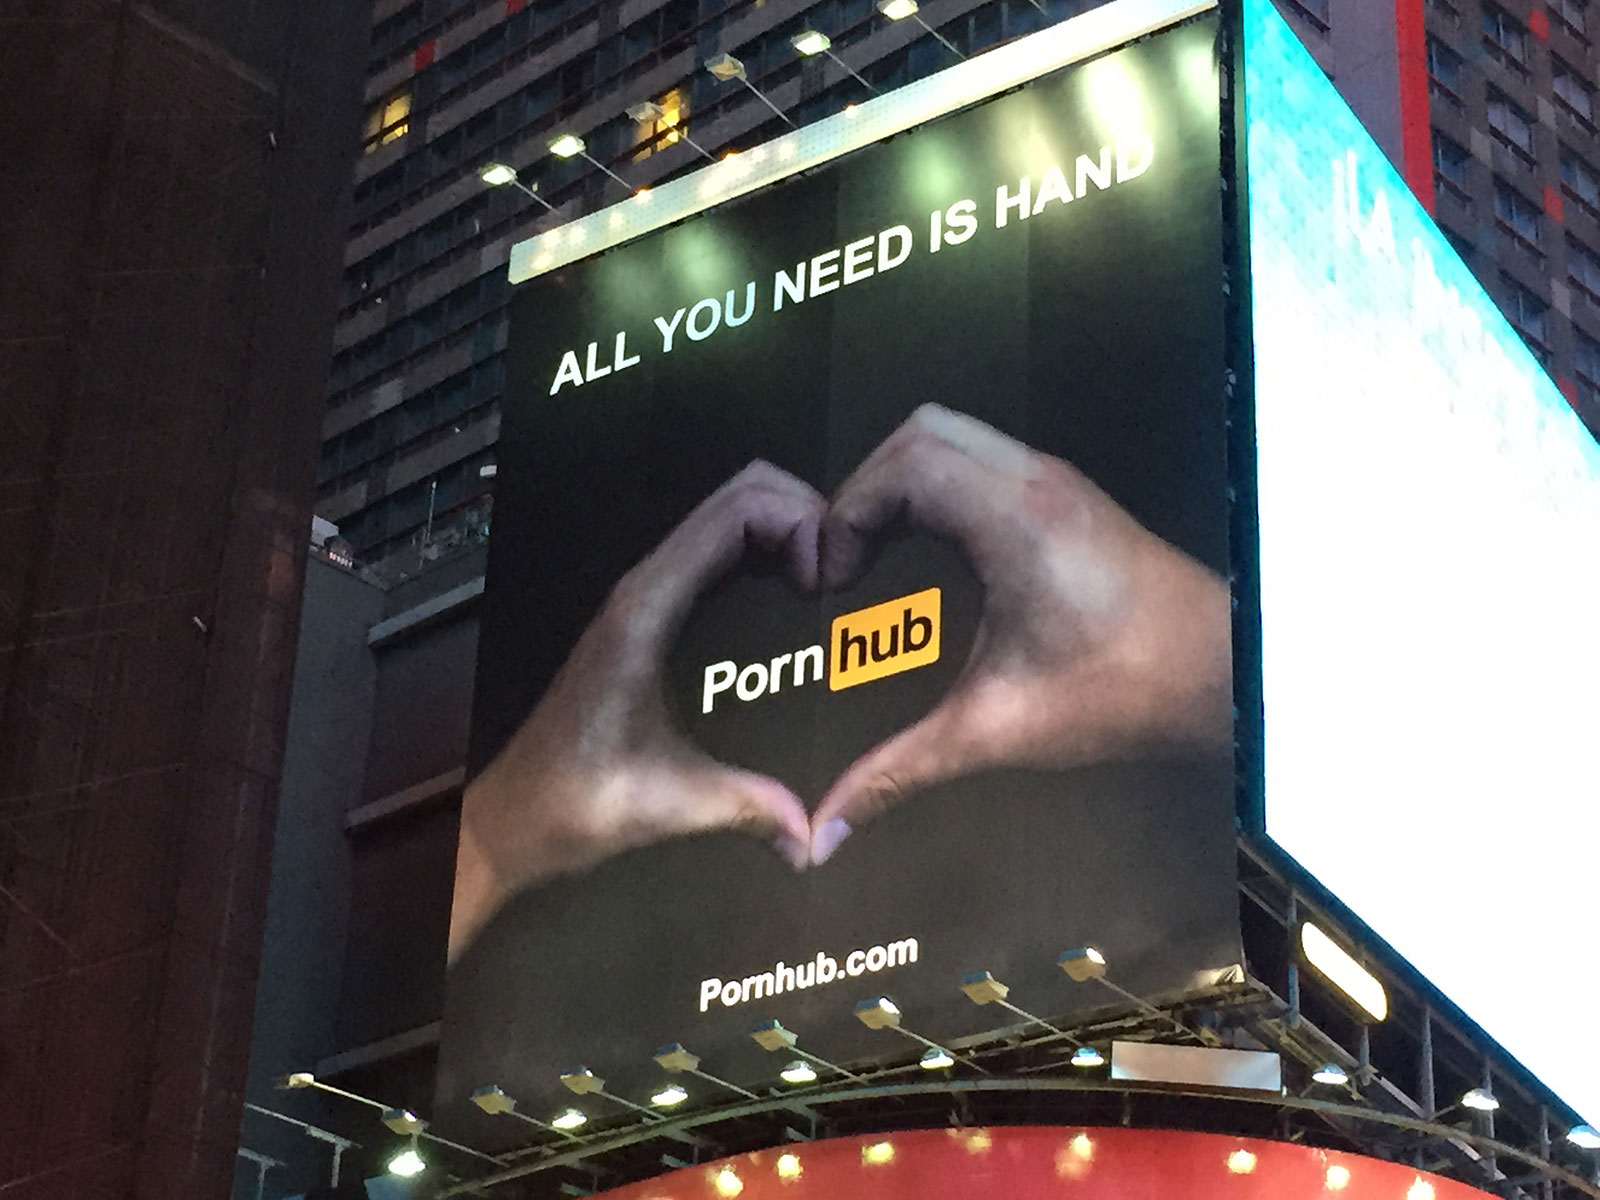 Pornhub billboard in Times Square NYC.